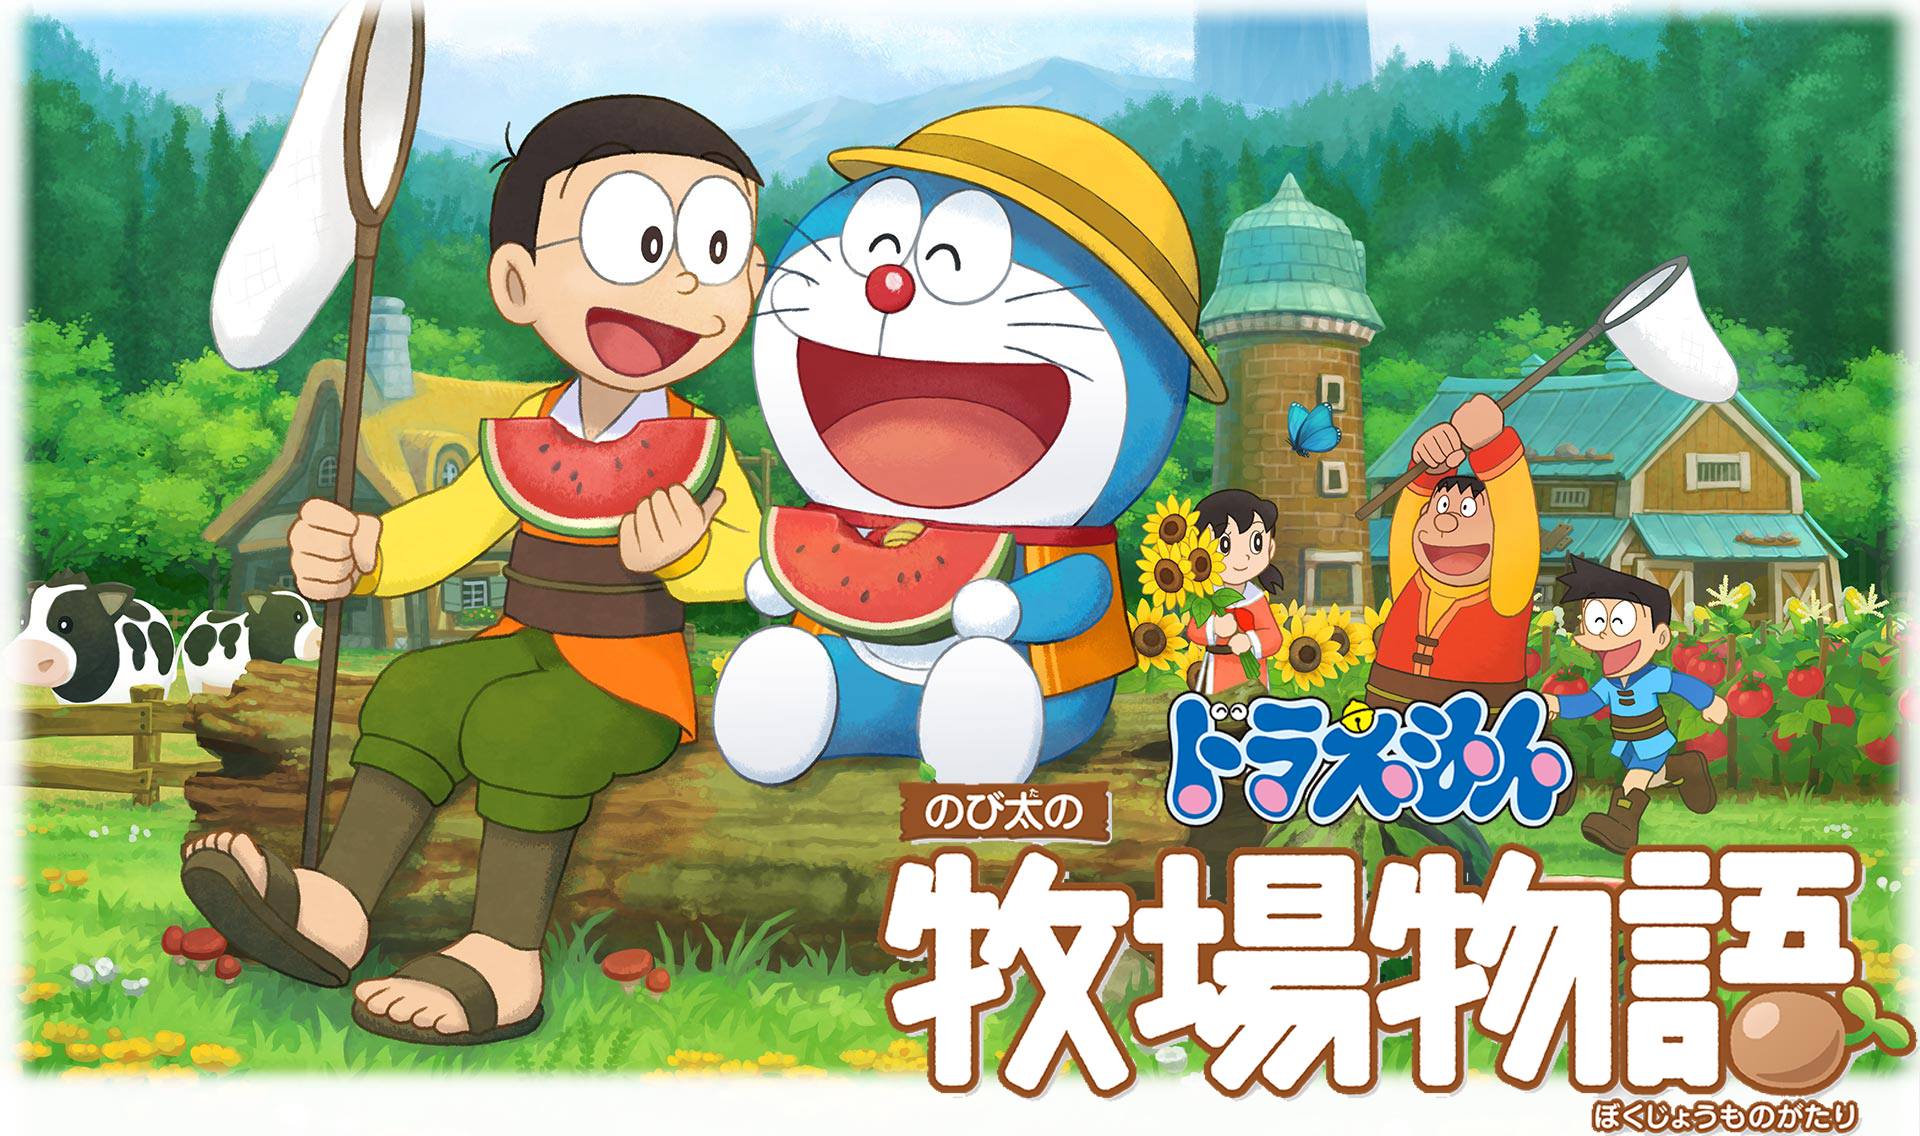 Malaysian retailer says Doraemon Story of Seasons will have an English